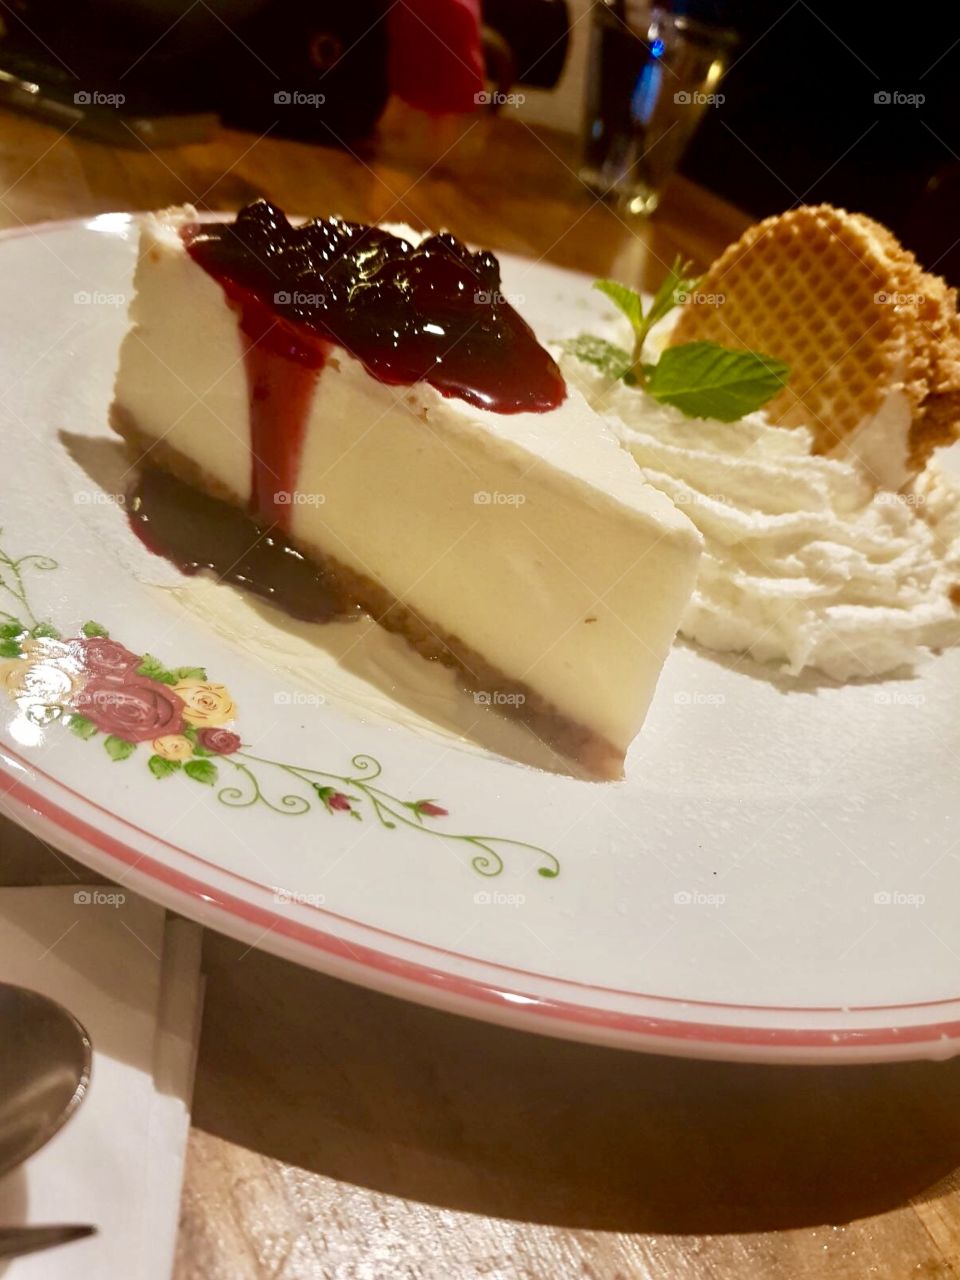 Cheesecake and cherries and whipped cream